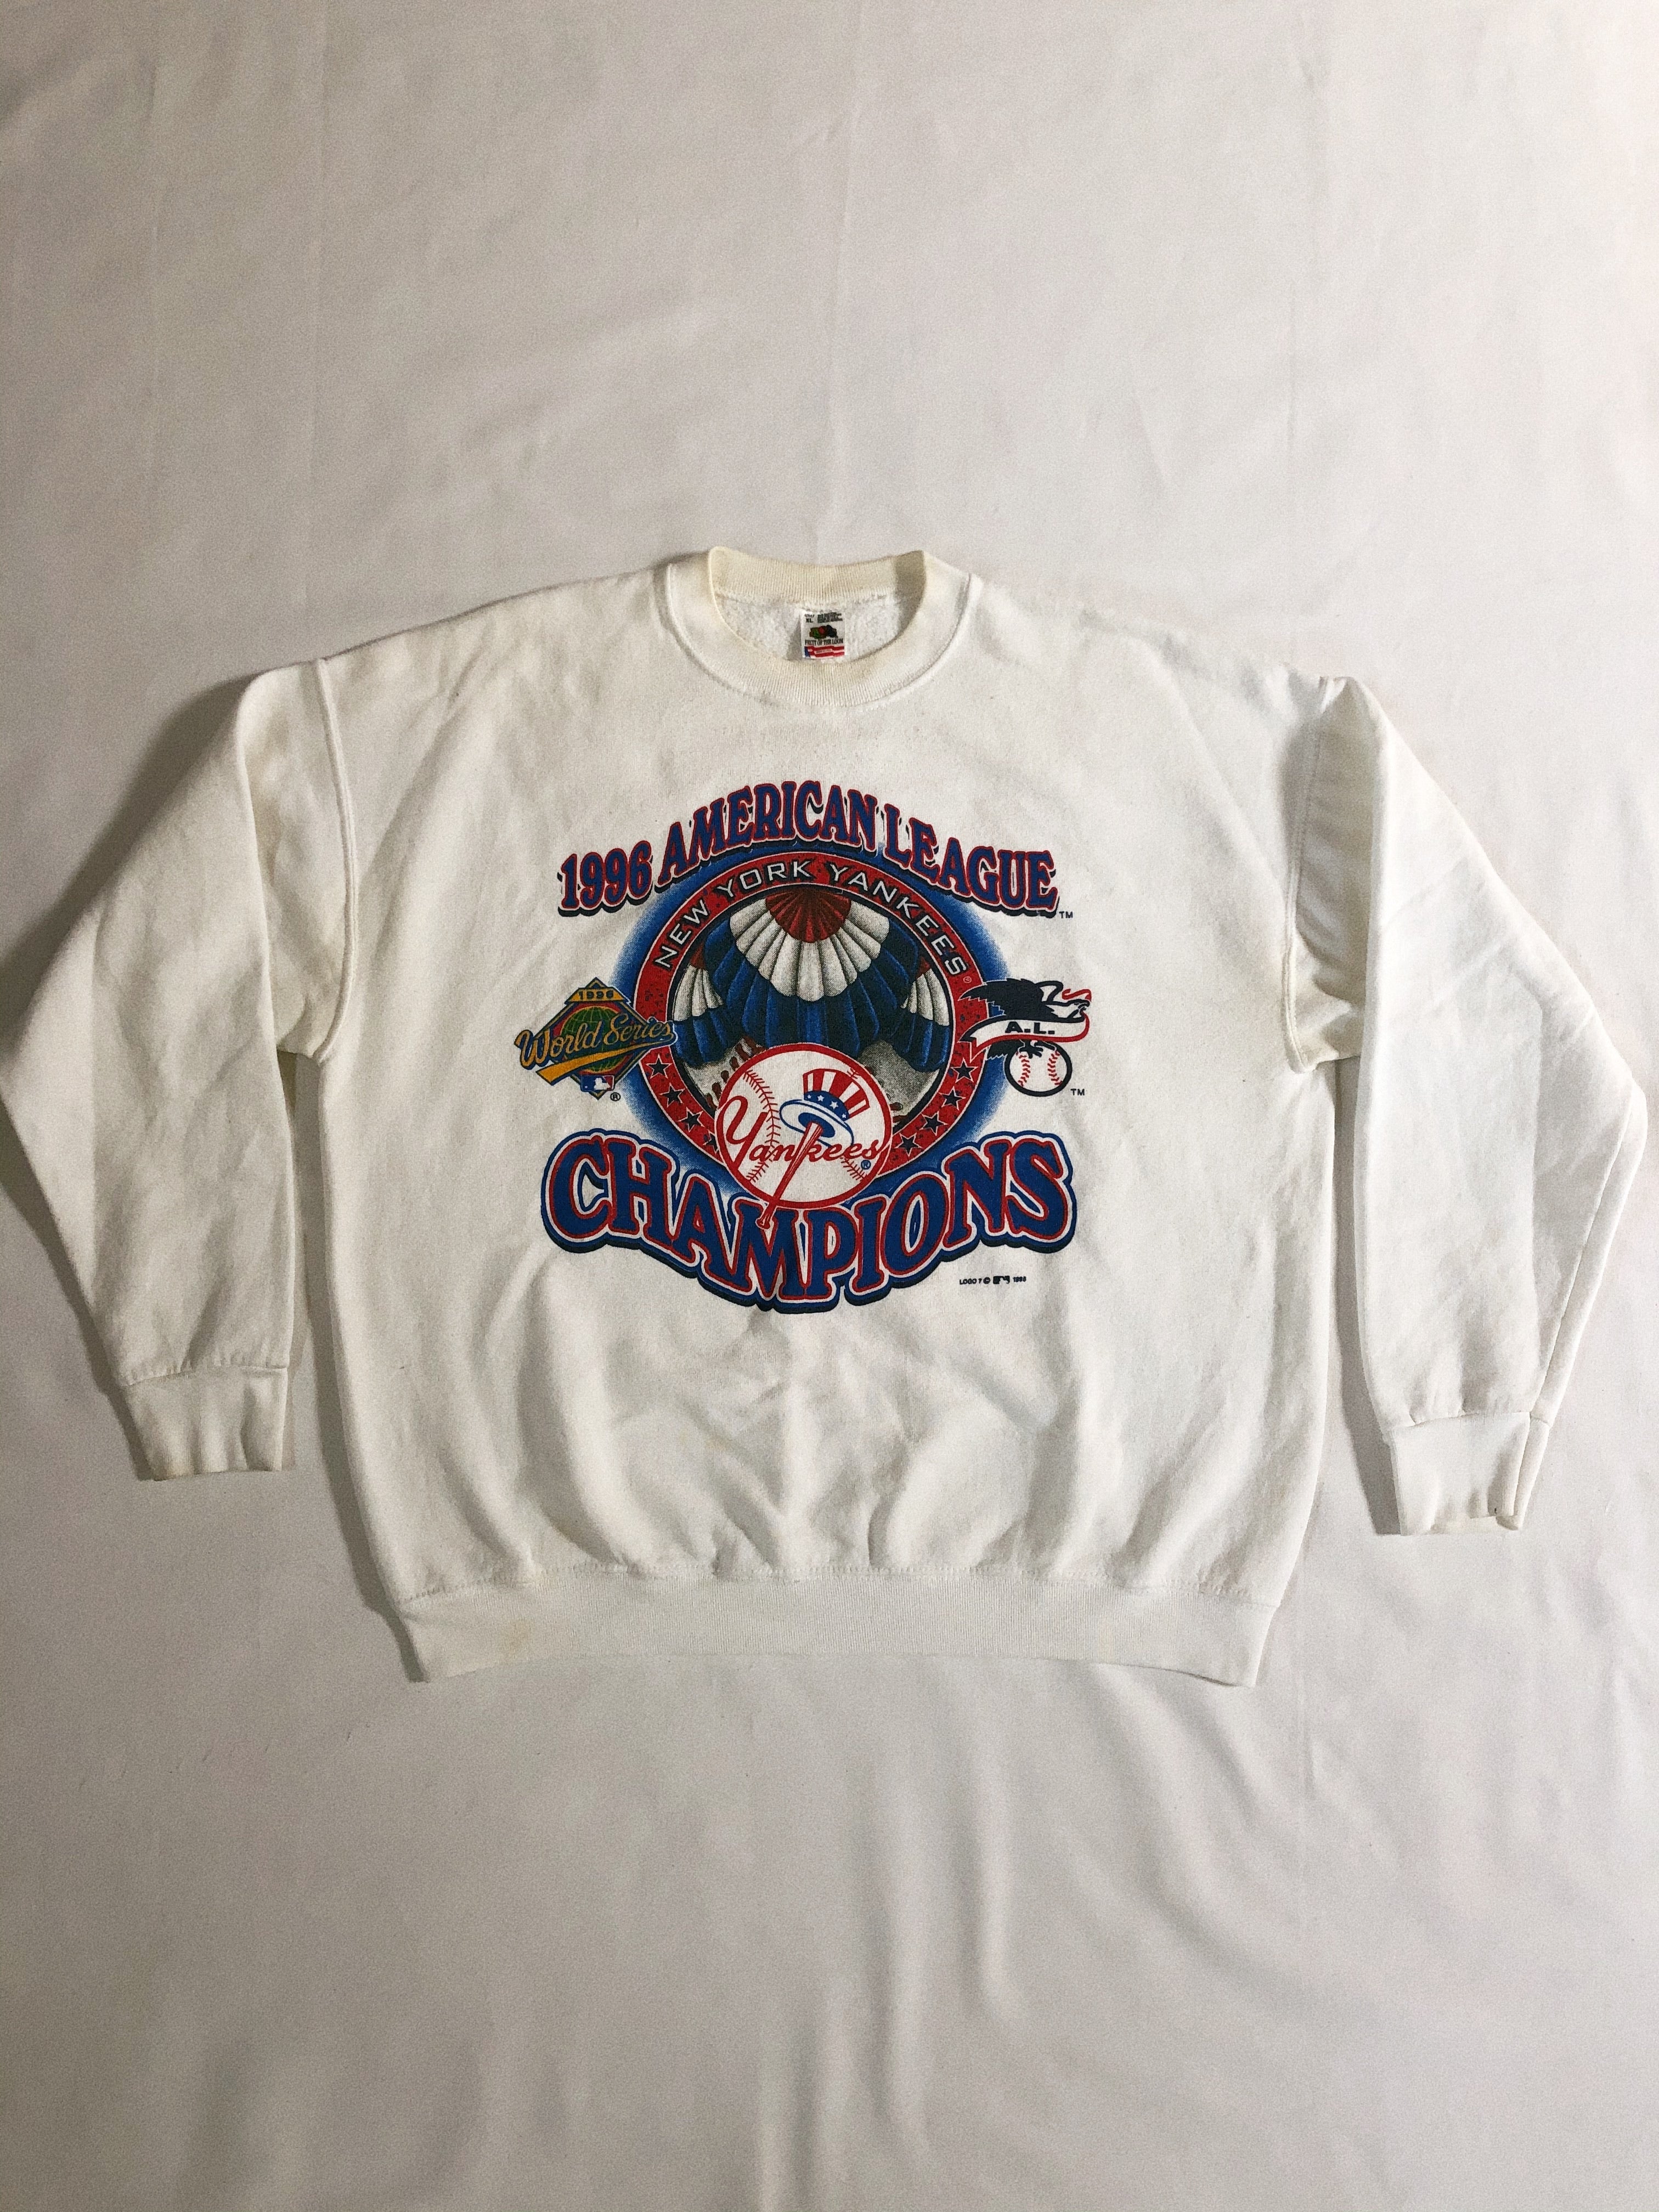 VINTAGE New York Yankees 1996 World Series Champions Sweatshirt Men’s Size  XL